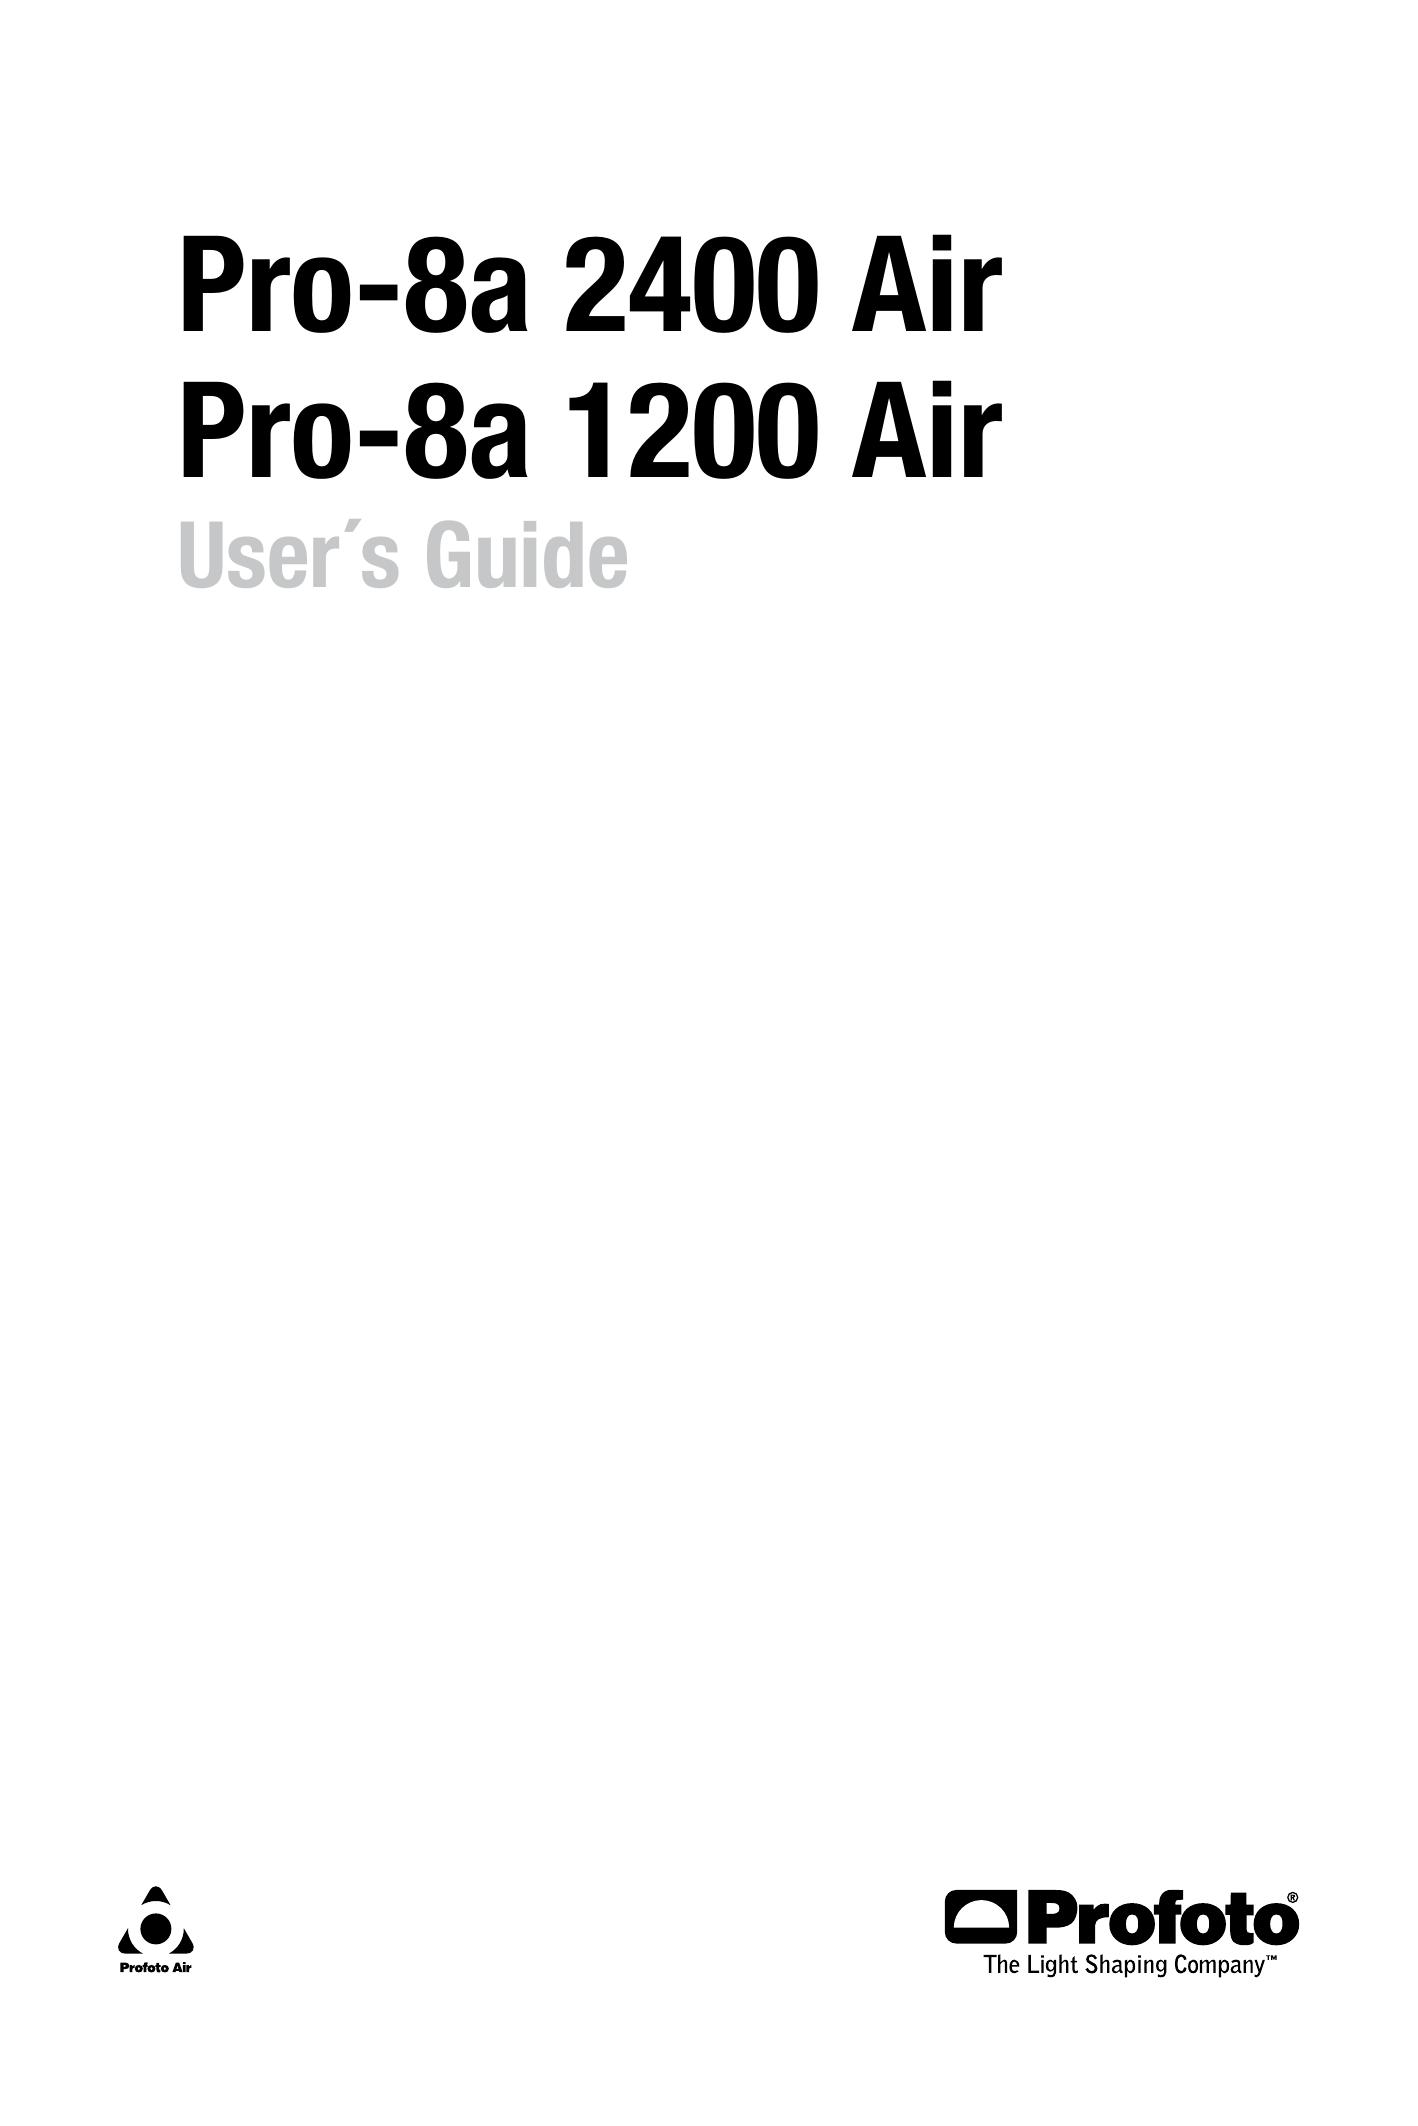 Profoto PRO-8A 2400 AIR Camera Accessories User Manual